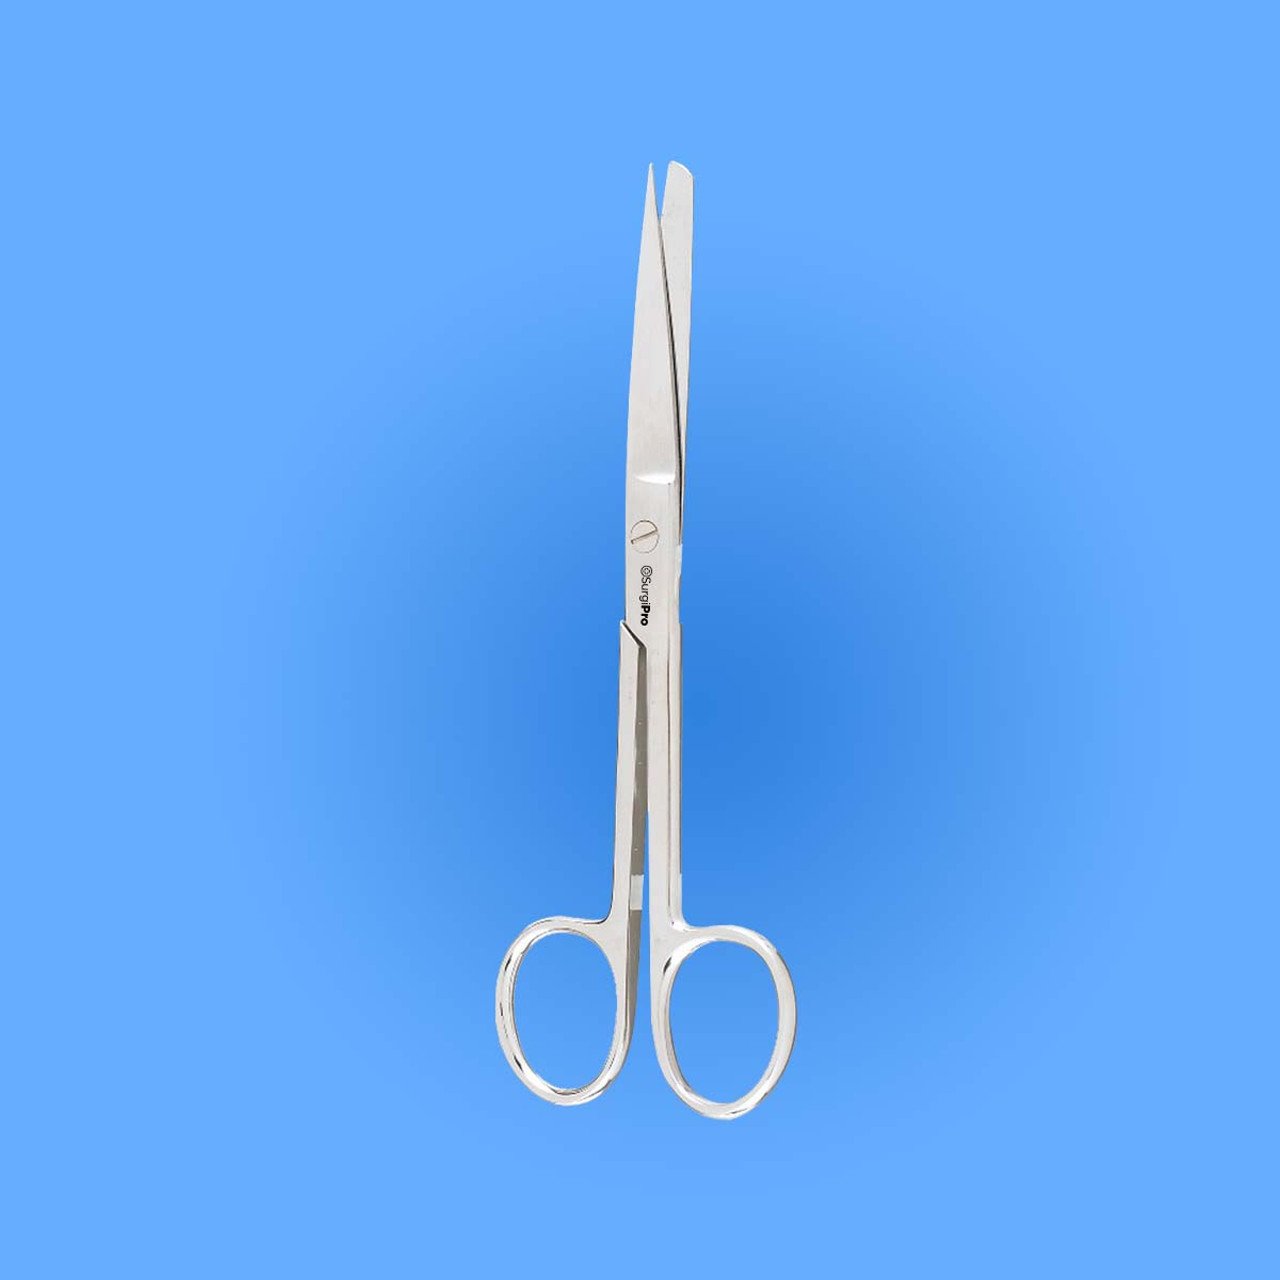 Operating Scissors - Curved, S/B, 5-1/2